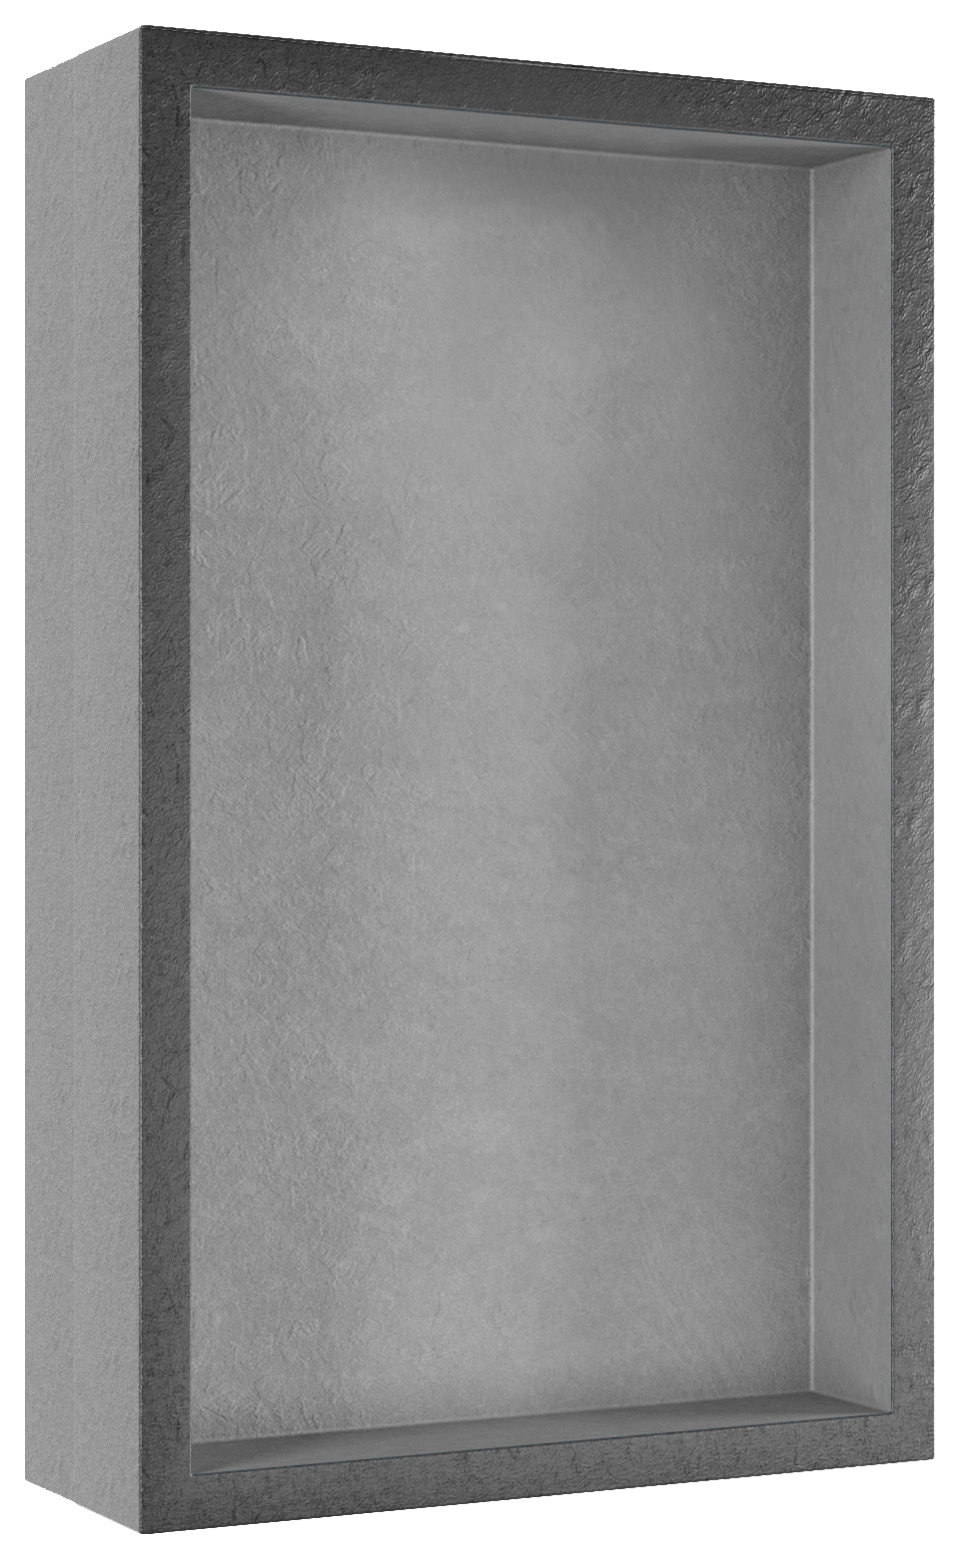 Abacus Pre-finished Metallic Zinc Effect Recessed Bathroom Storage Unit 1600 x 350 x 180mm